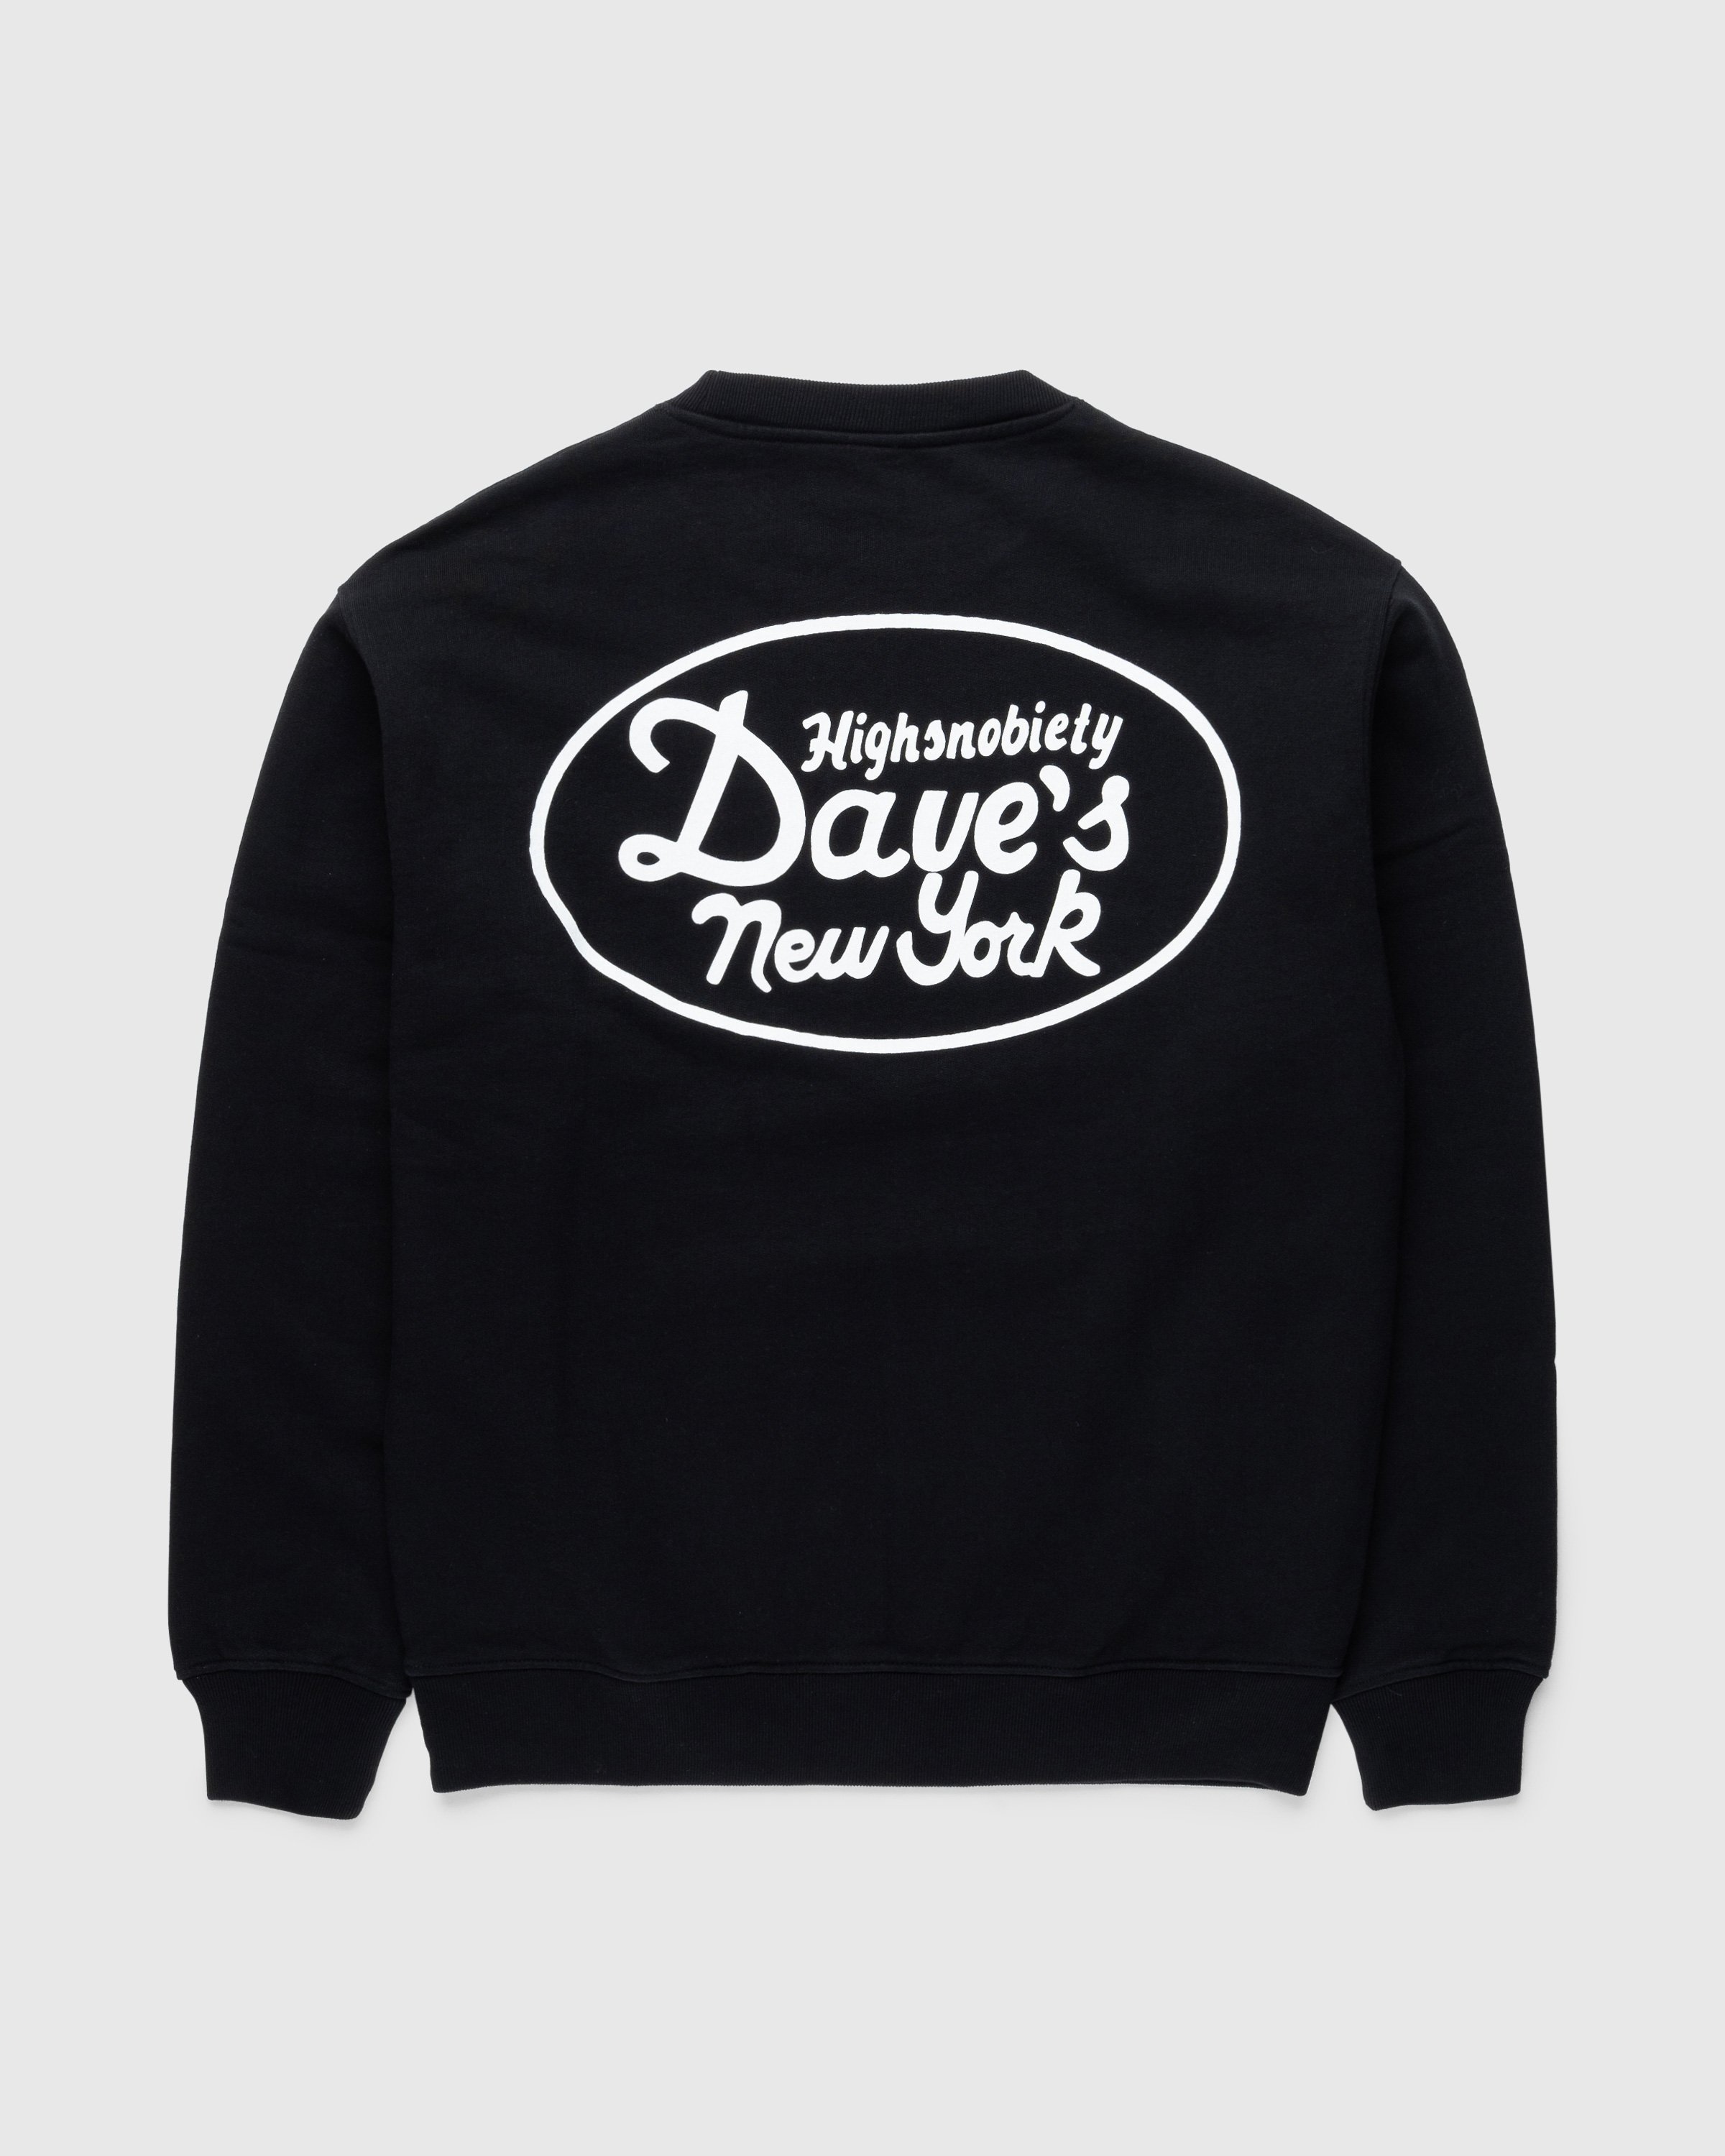 Dave's New York x Highsnobiety - Black Crewneck - Clothing - Black - Image 1